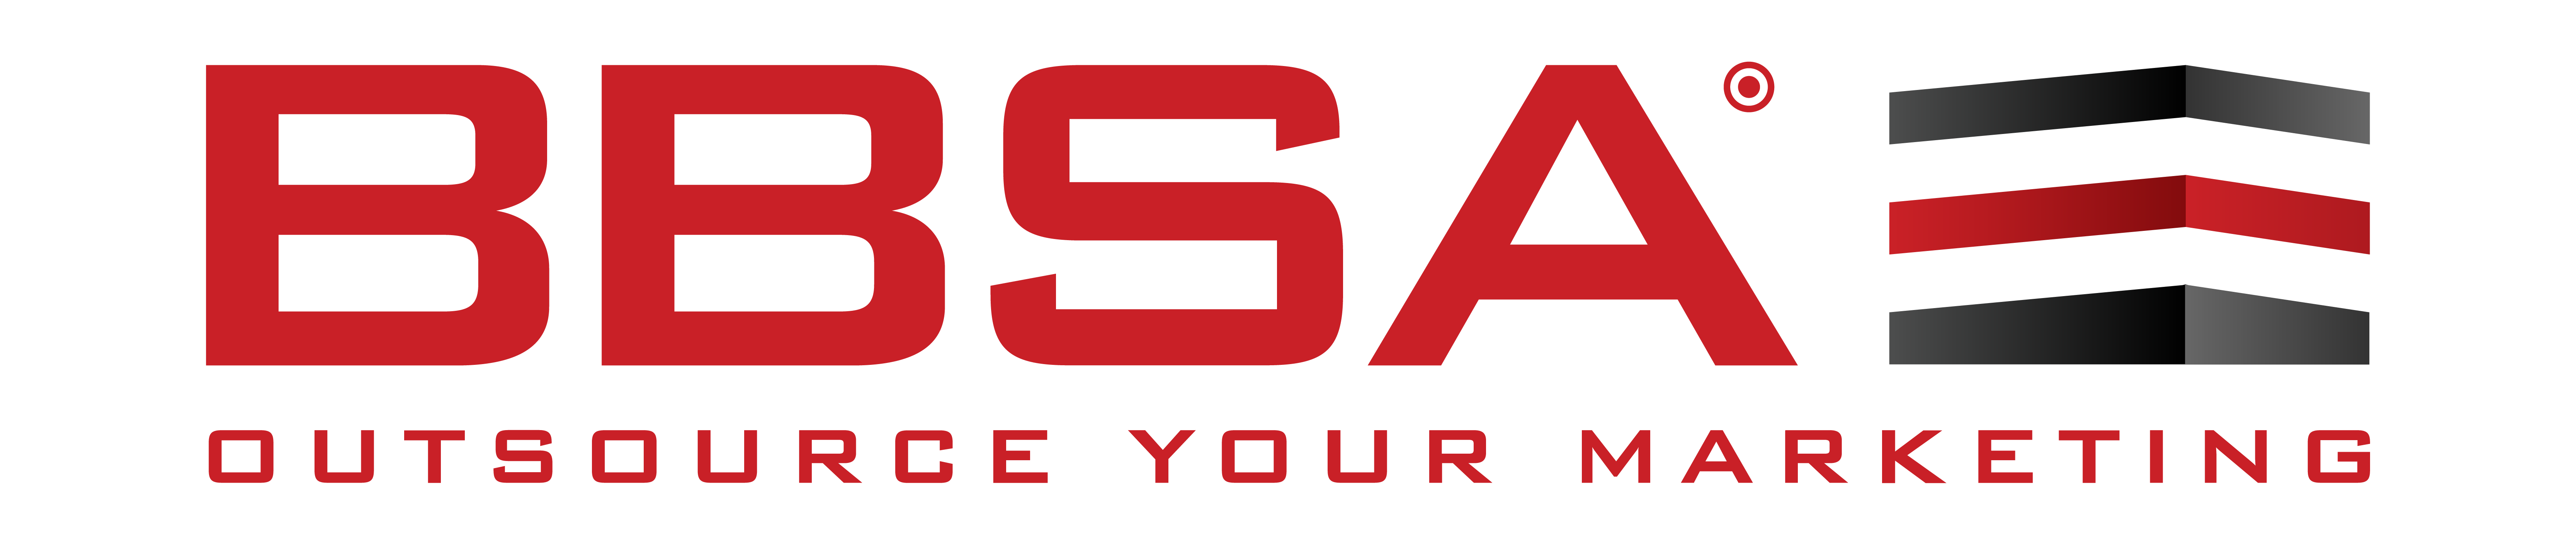 BBSA Logo I Outsourced Marketing I Marketing